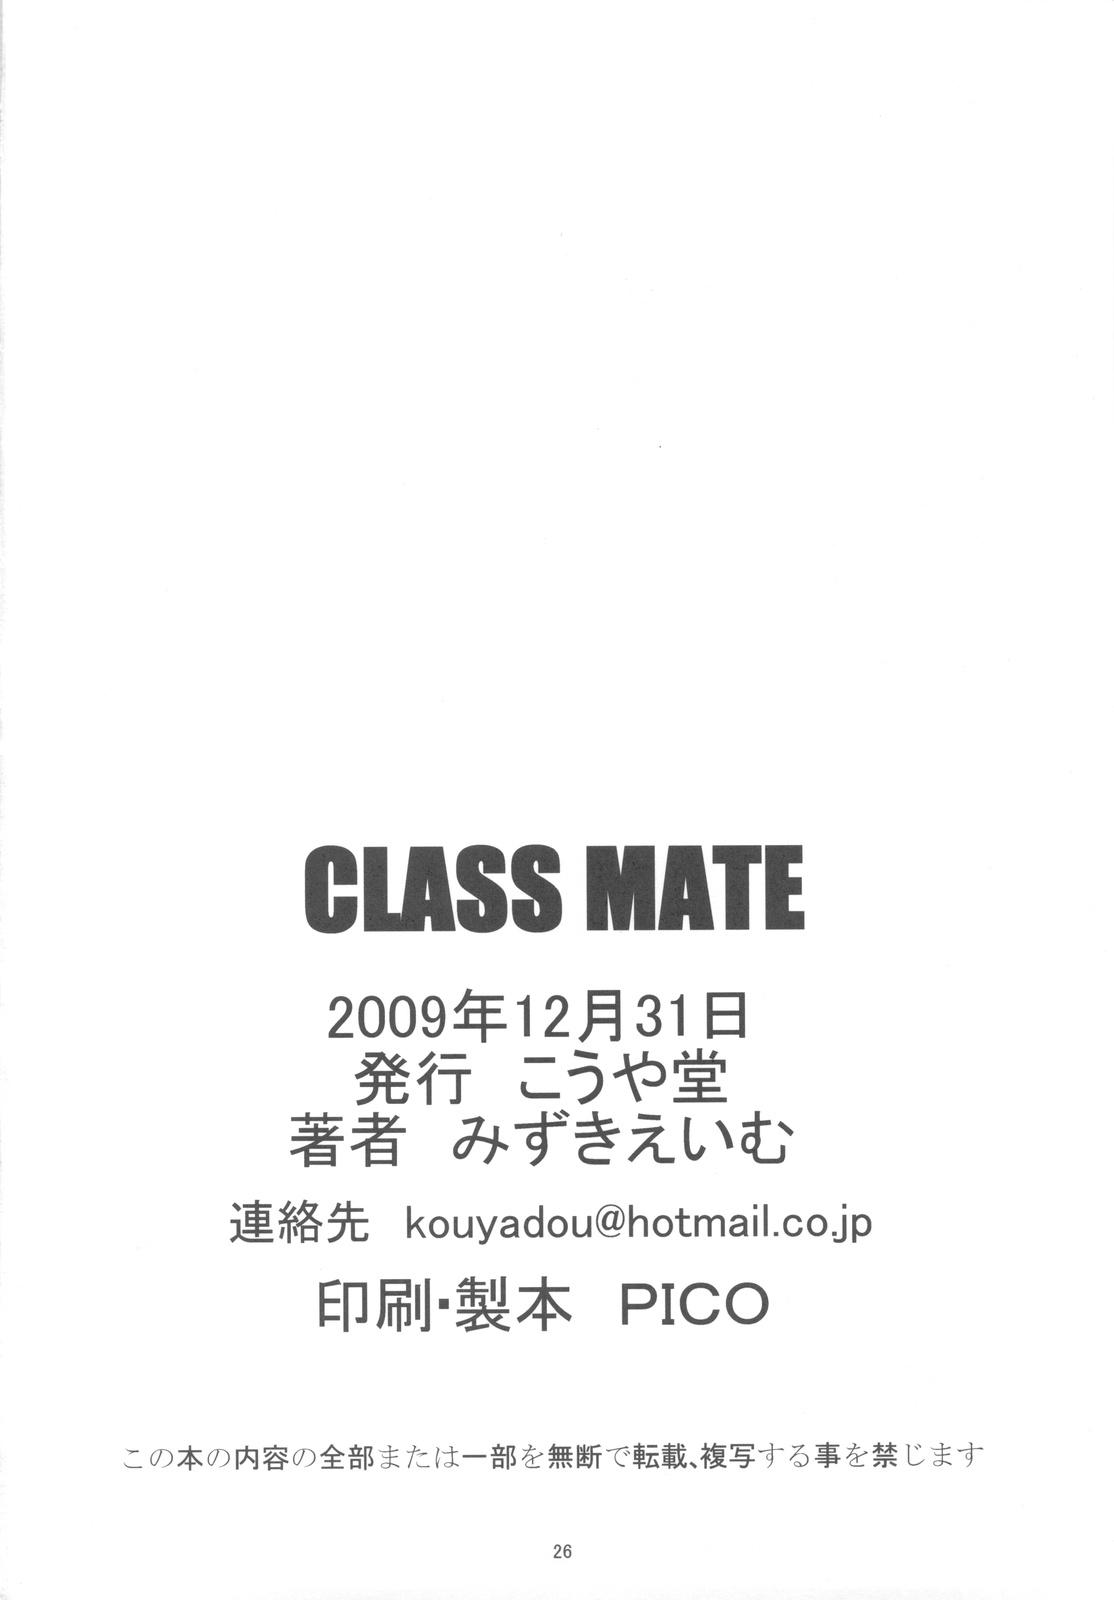 CLASS MATE 25